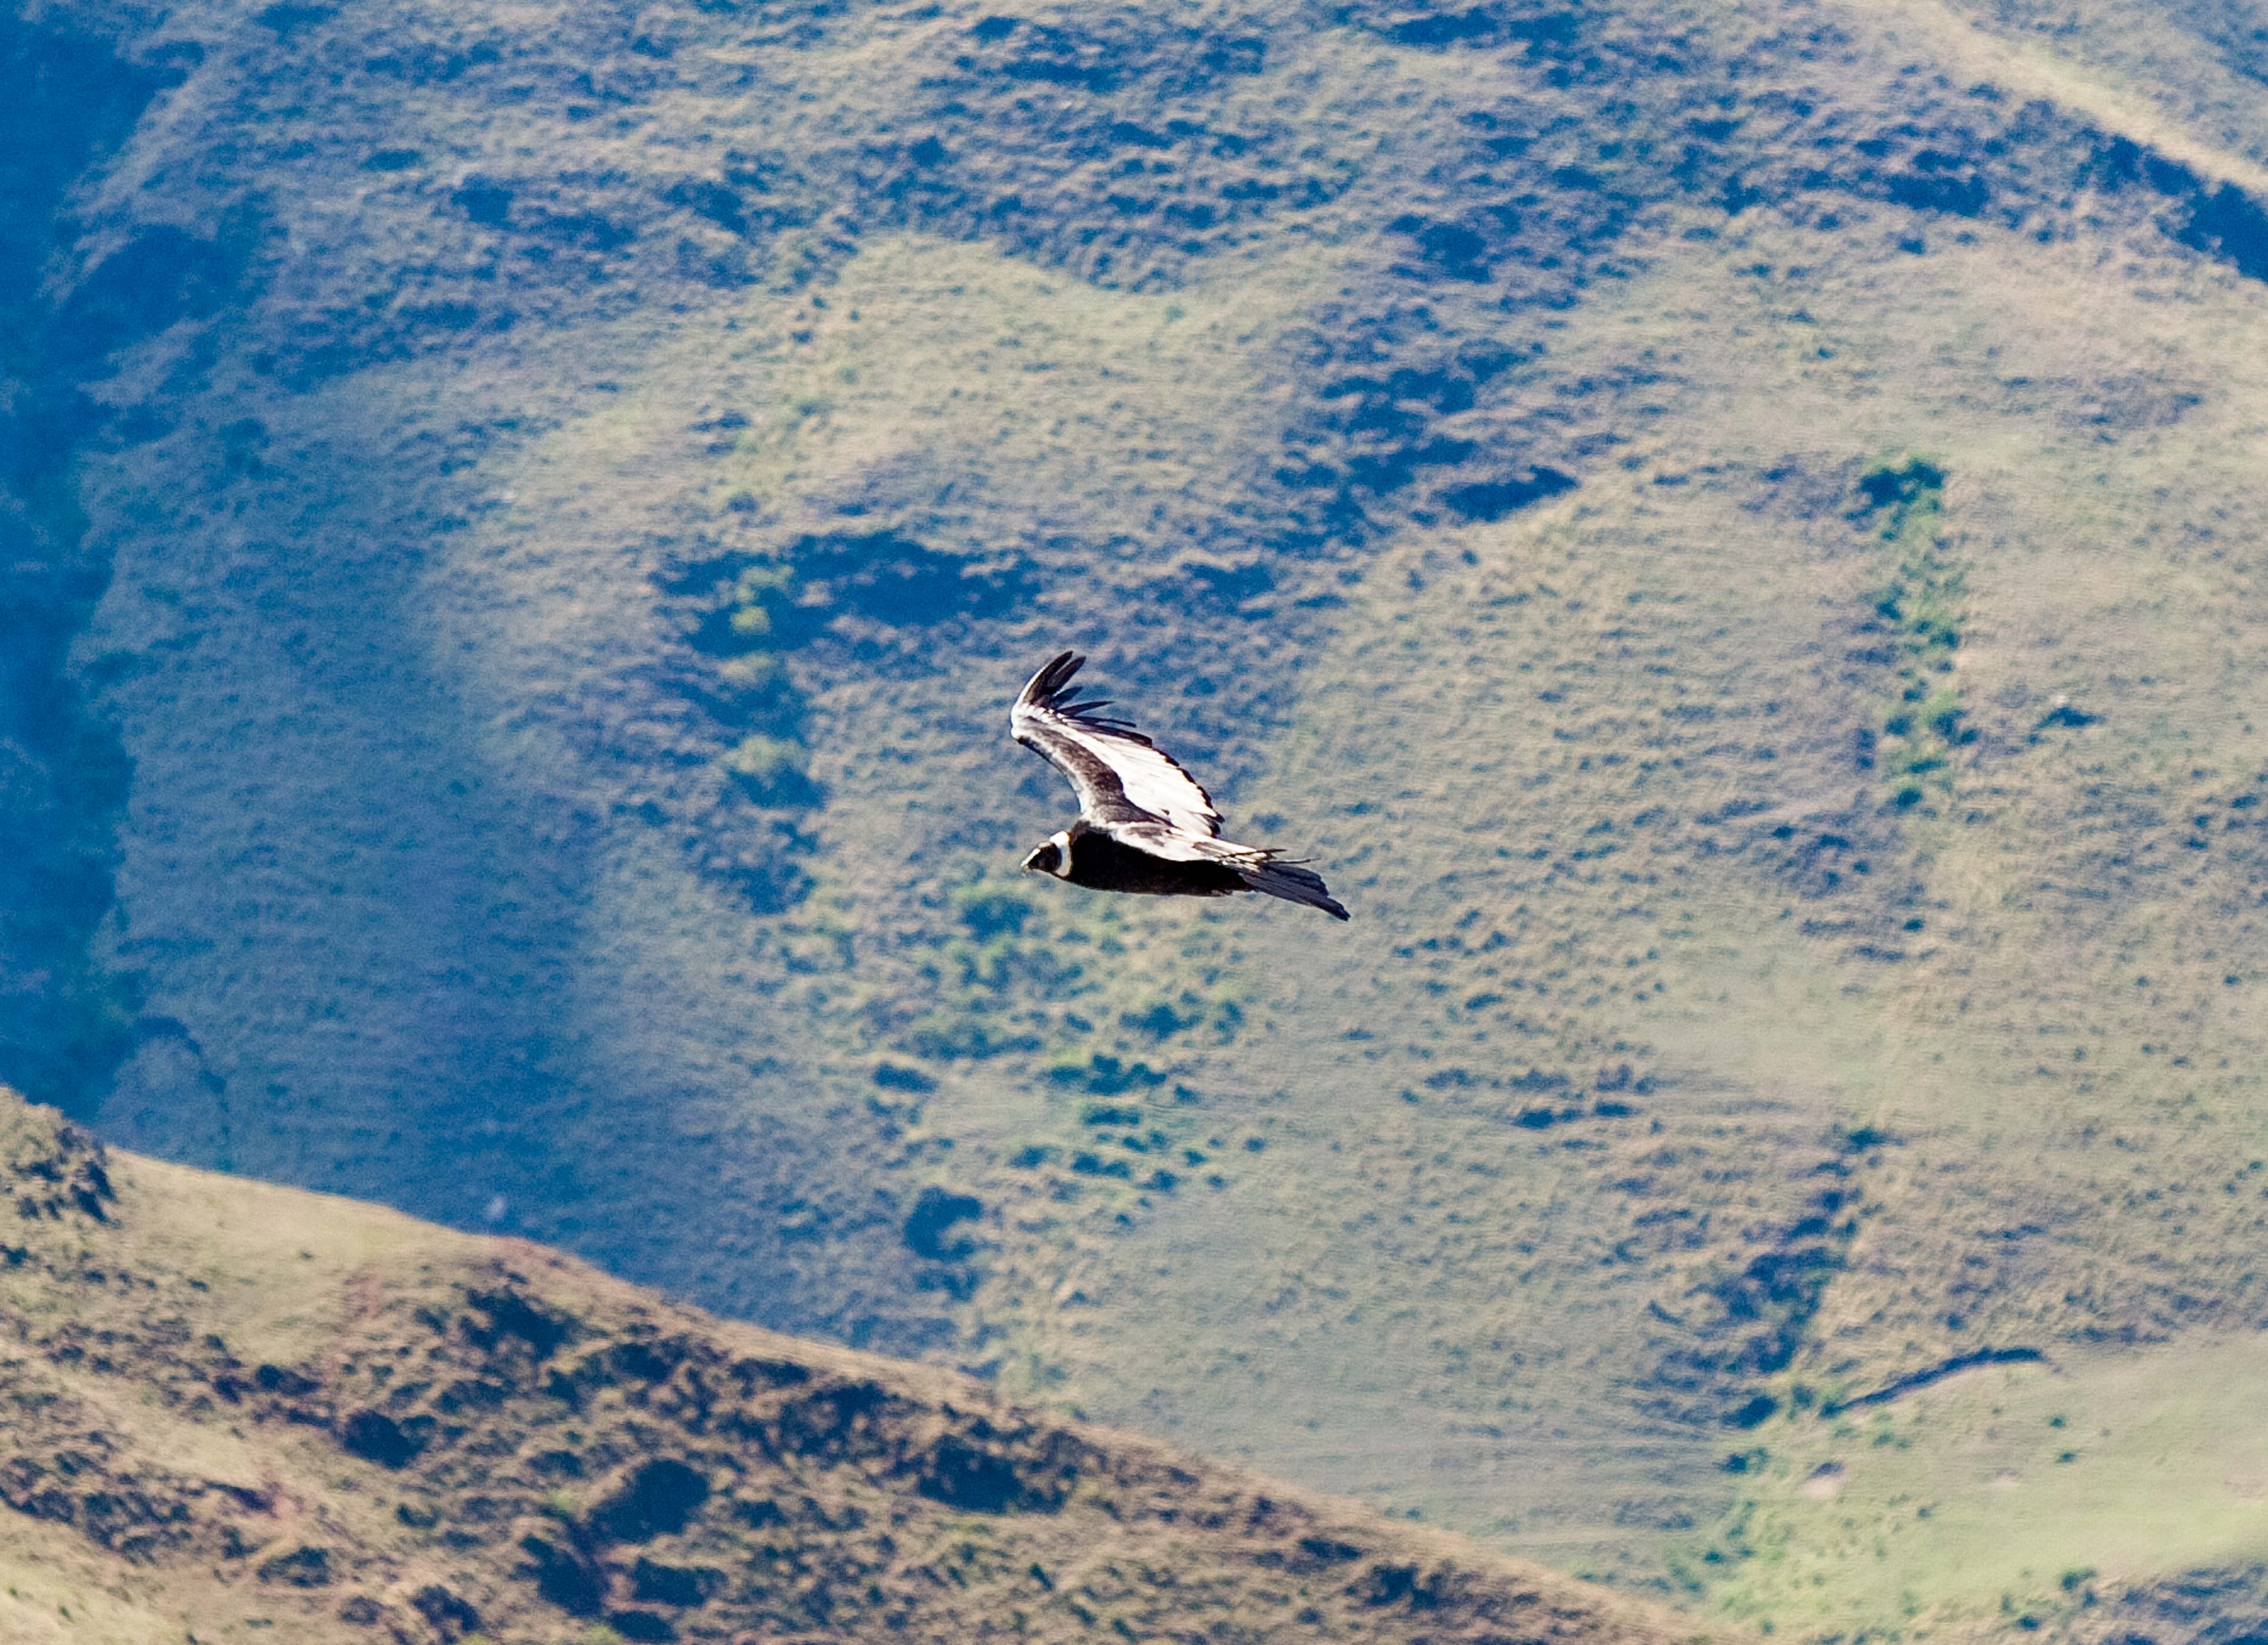 Argentina, Jujuy Prov, Condor At Molulu Hillside, 2010, IMG 8391 CU2